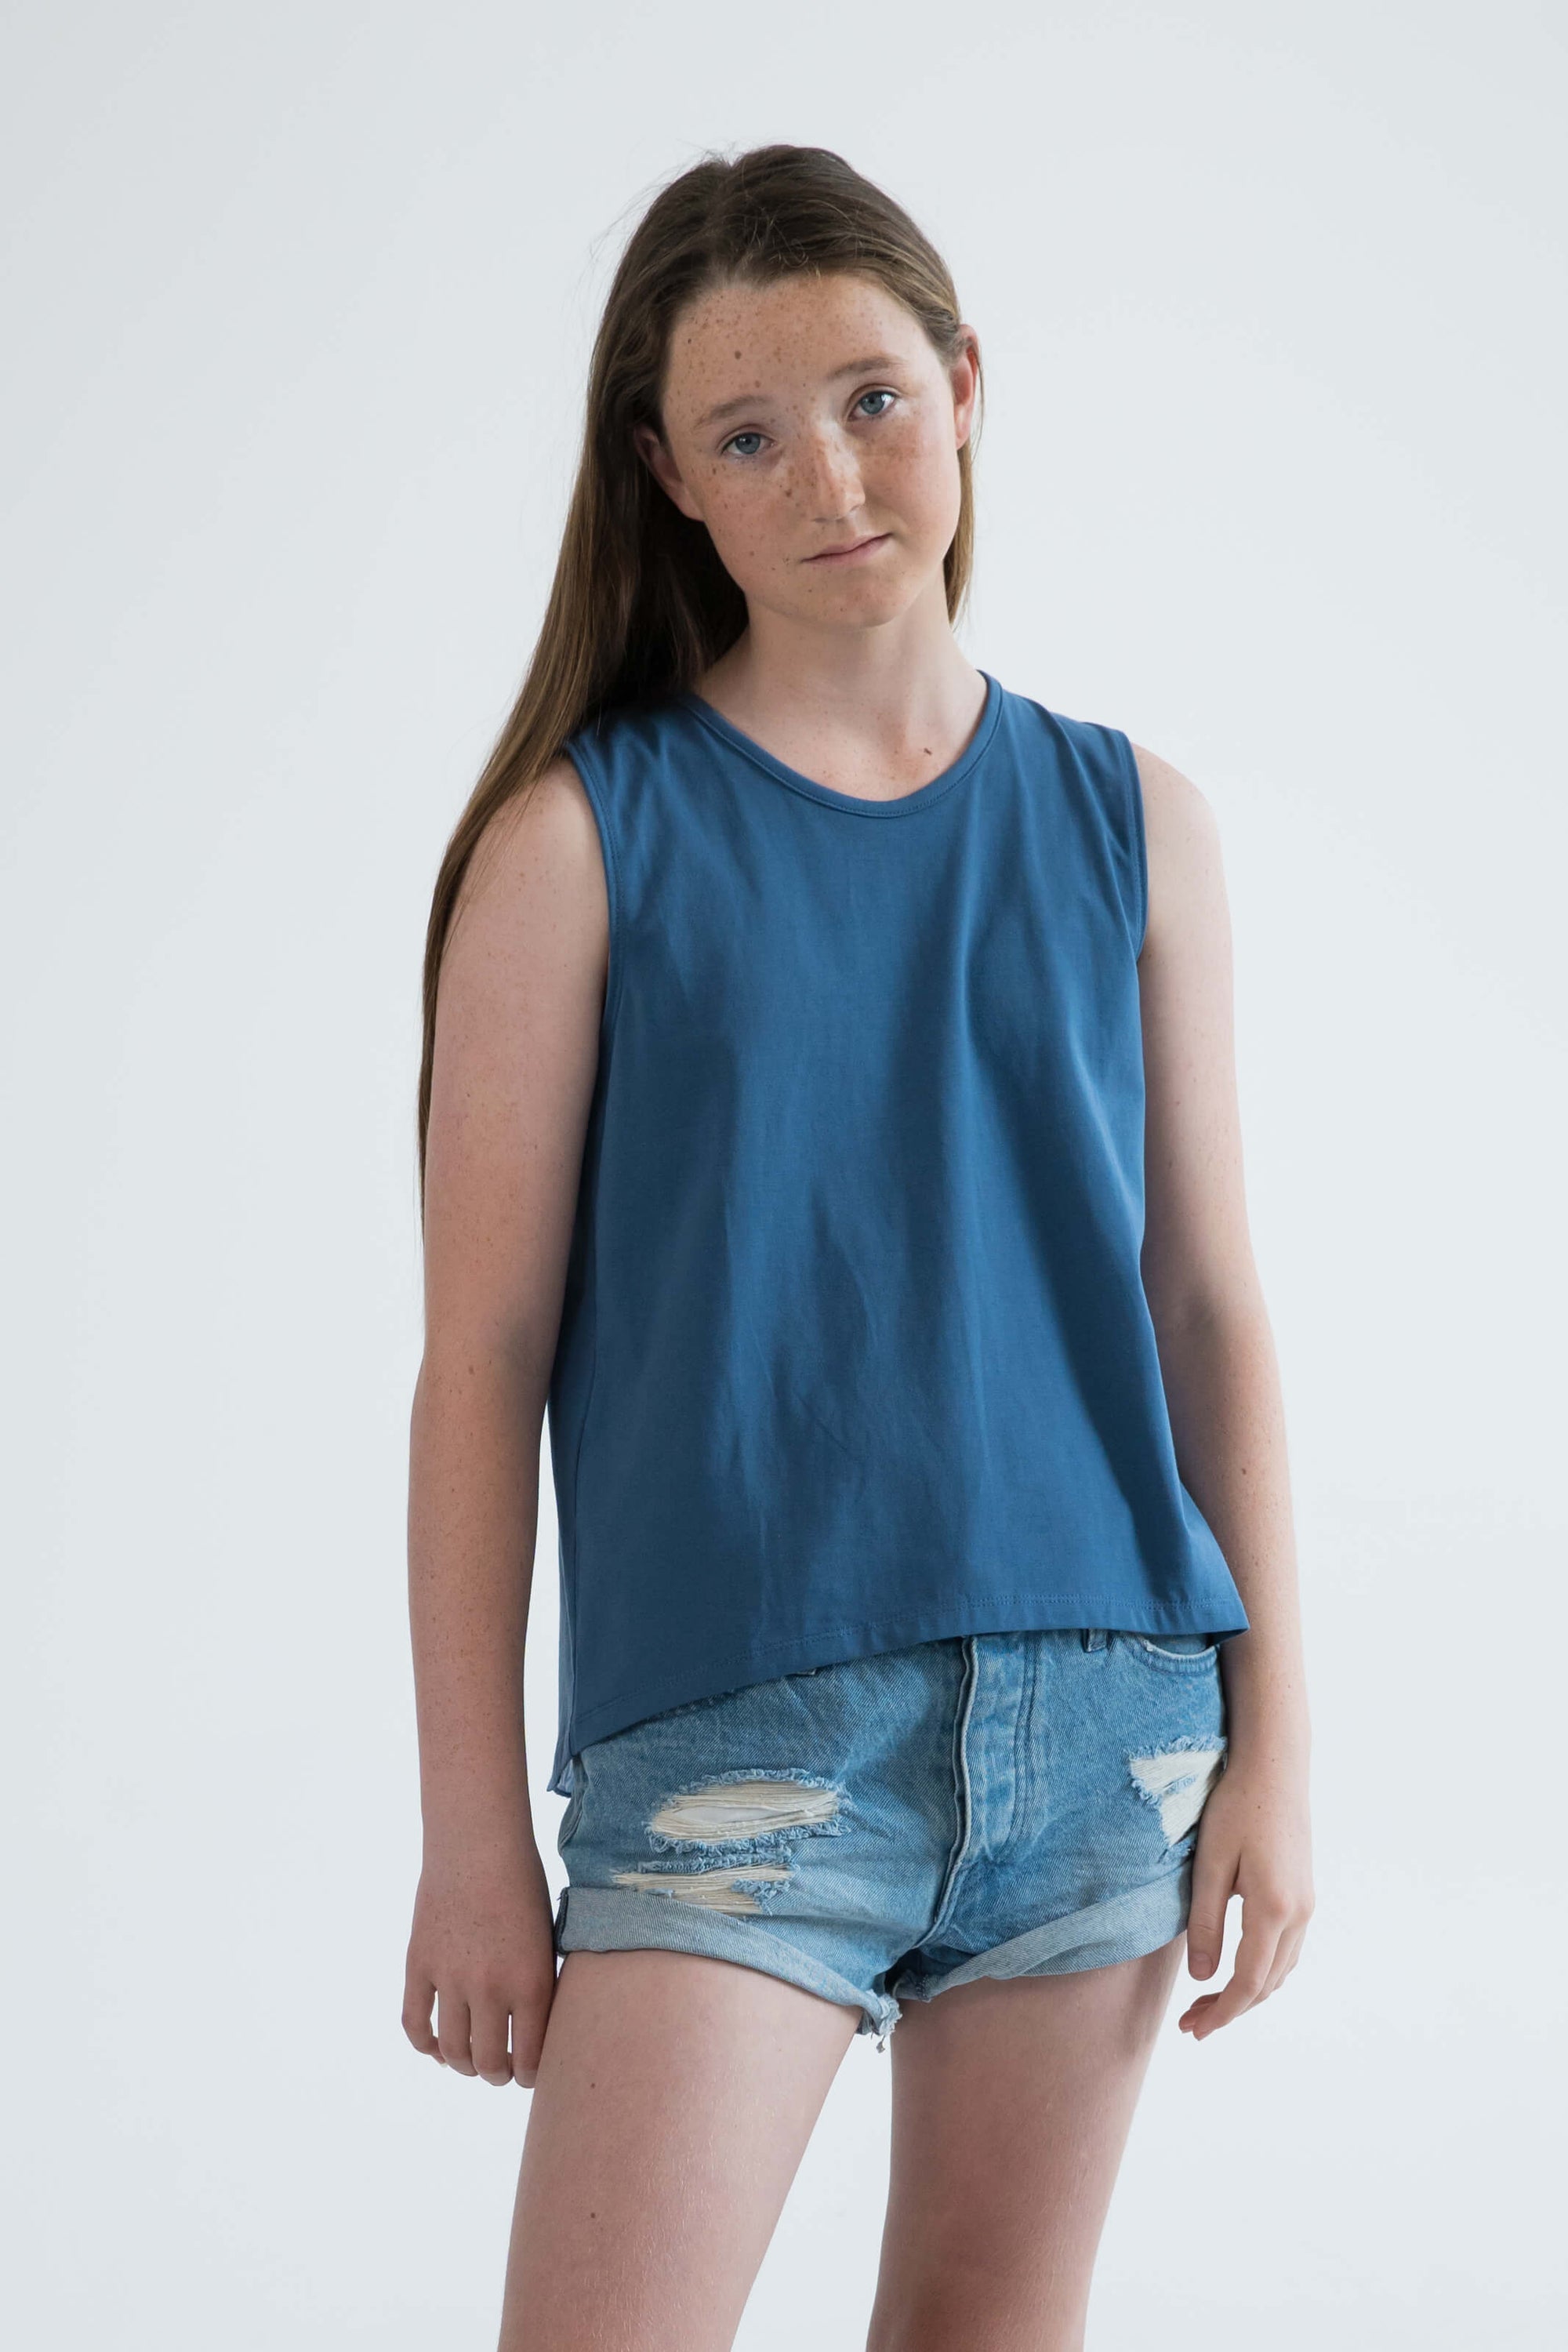 blue teen girls clothing sleeveless singlet top jungle summer print by Love Haidee Australia racer back